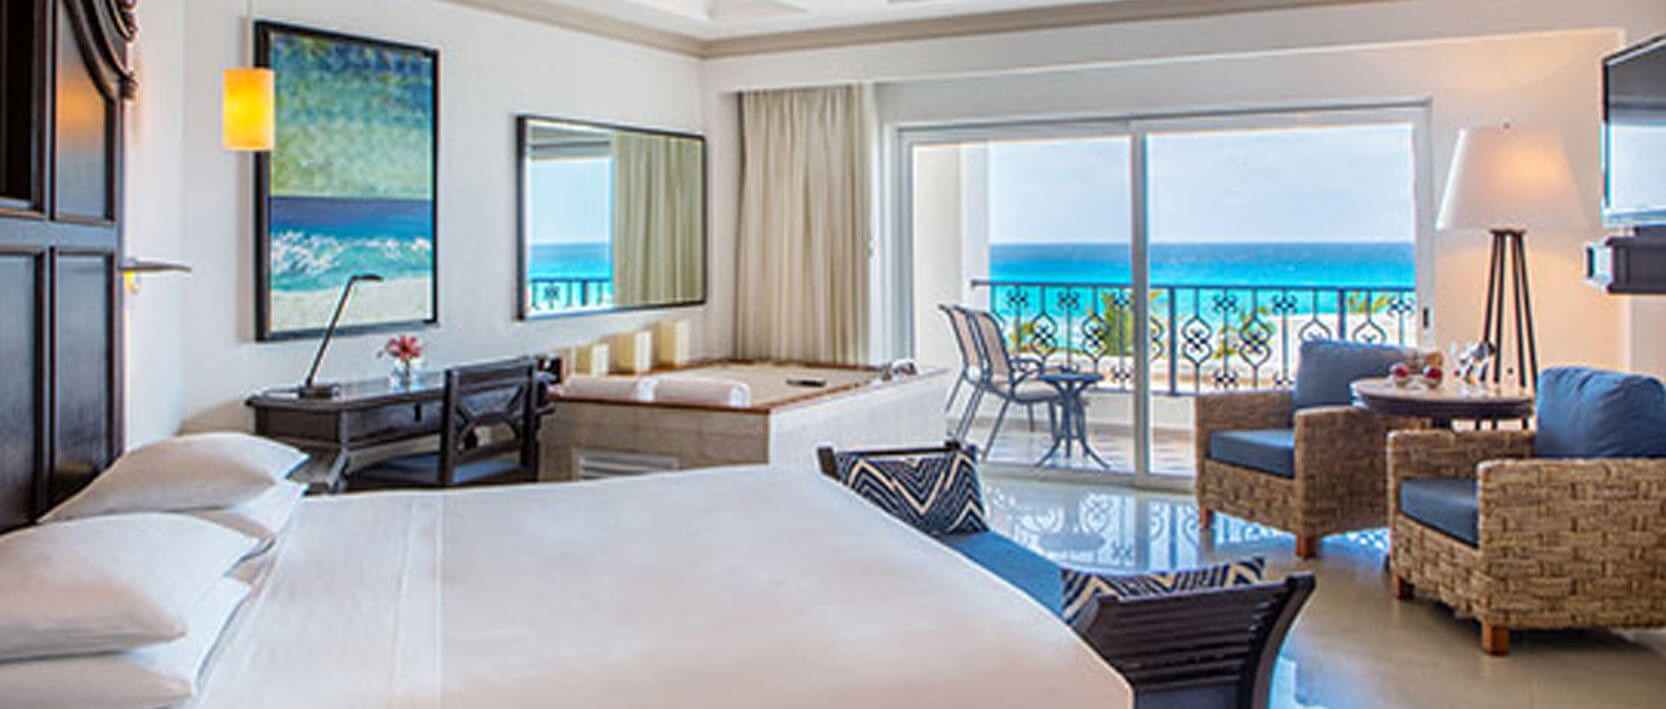 Hyatt Zilara Cancun Accommodations - Ocean View Junior Suite King or Double